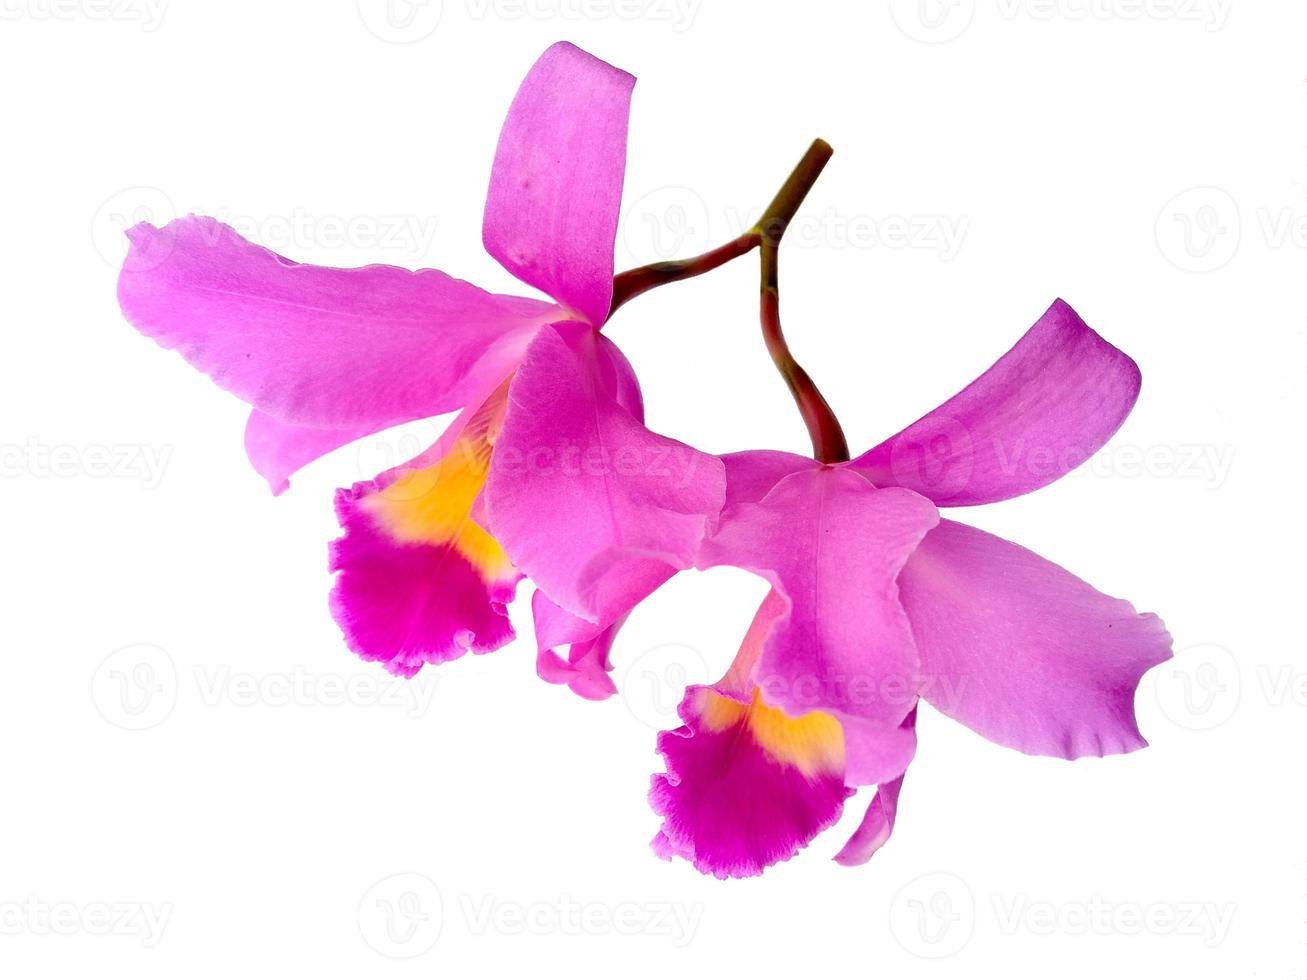 vackra lila cattleya orkidéblommor isolerad på vit bakgrund foto